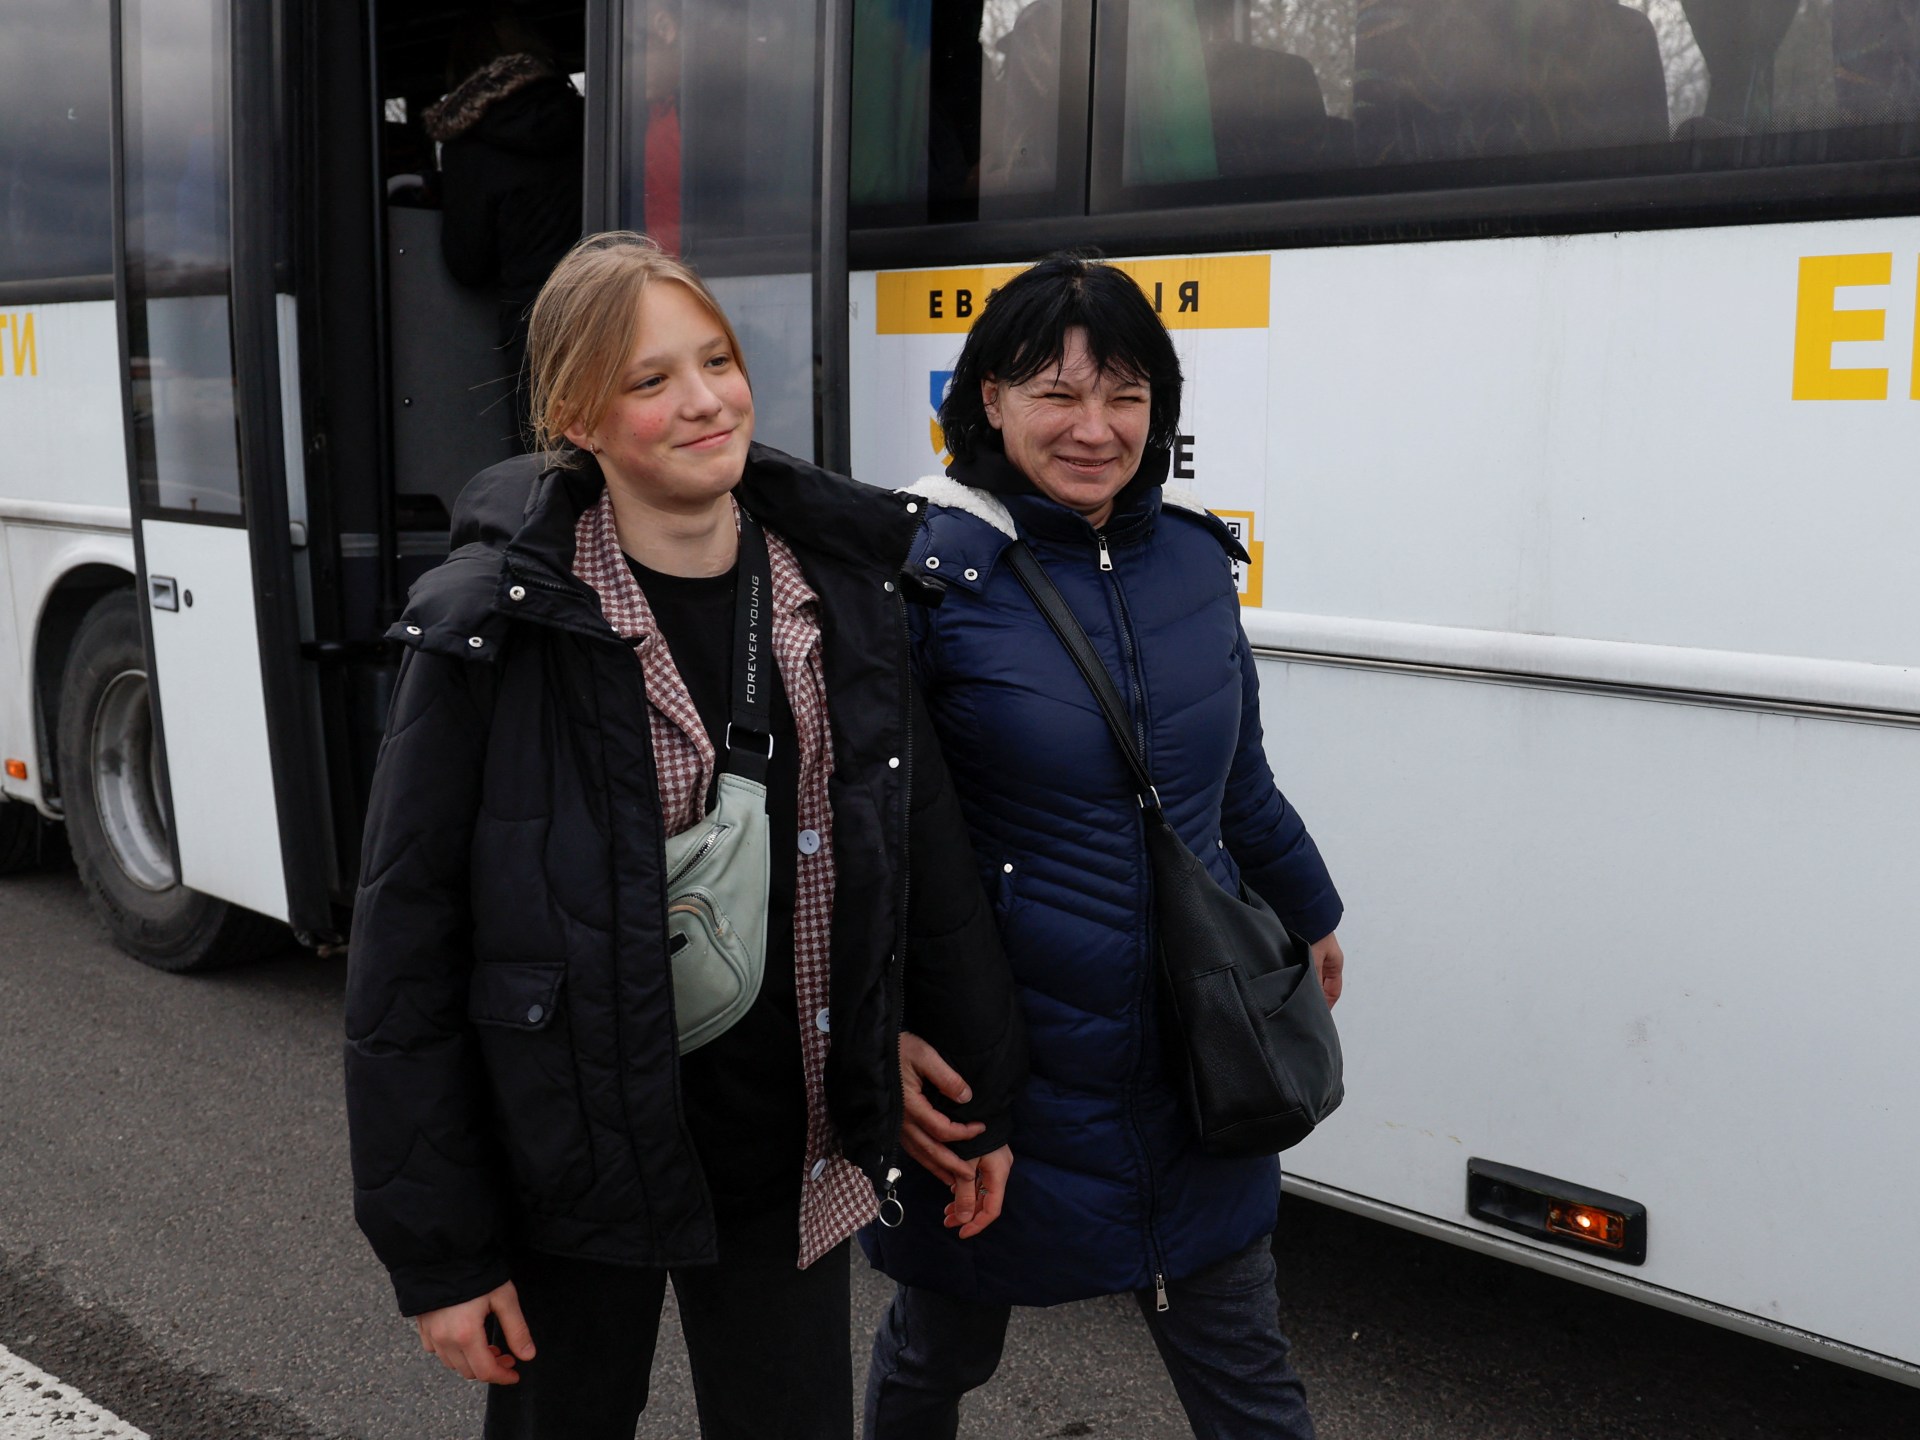 Ukraine children returned from Russia after alleged deportation | Russia-Ukraine war News